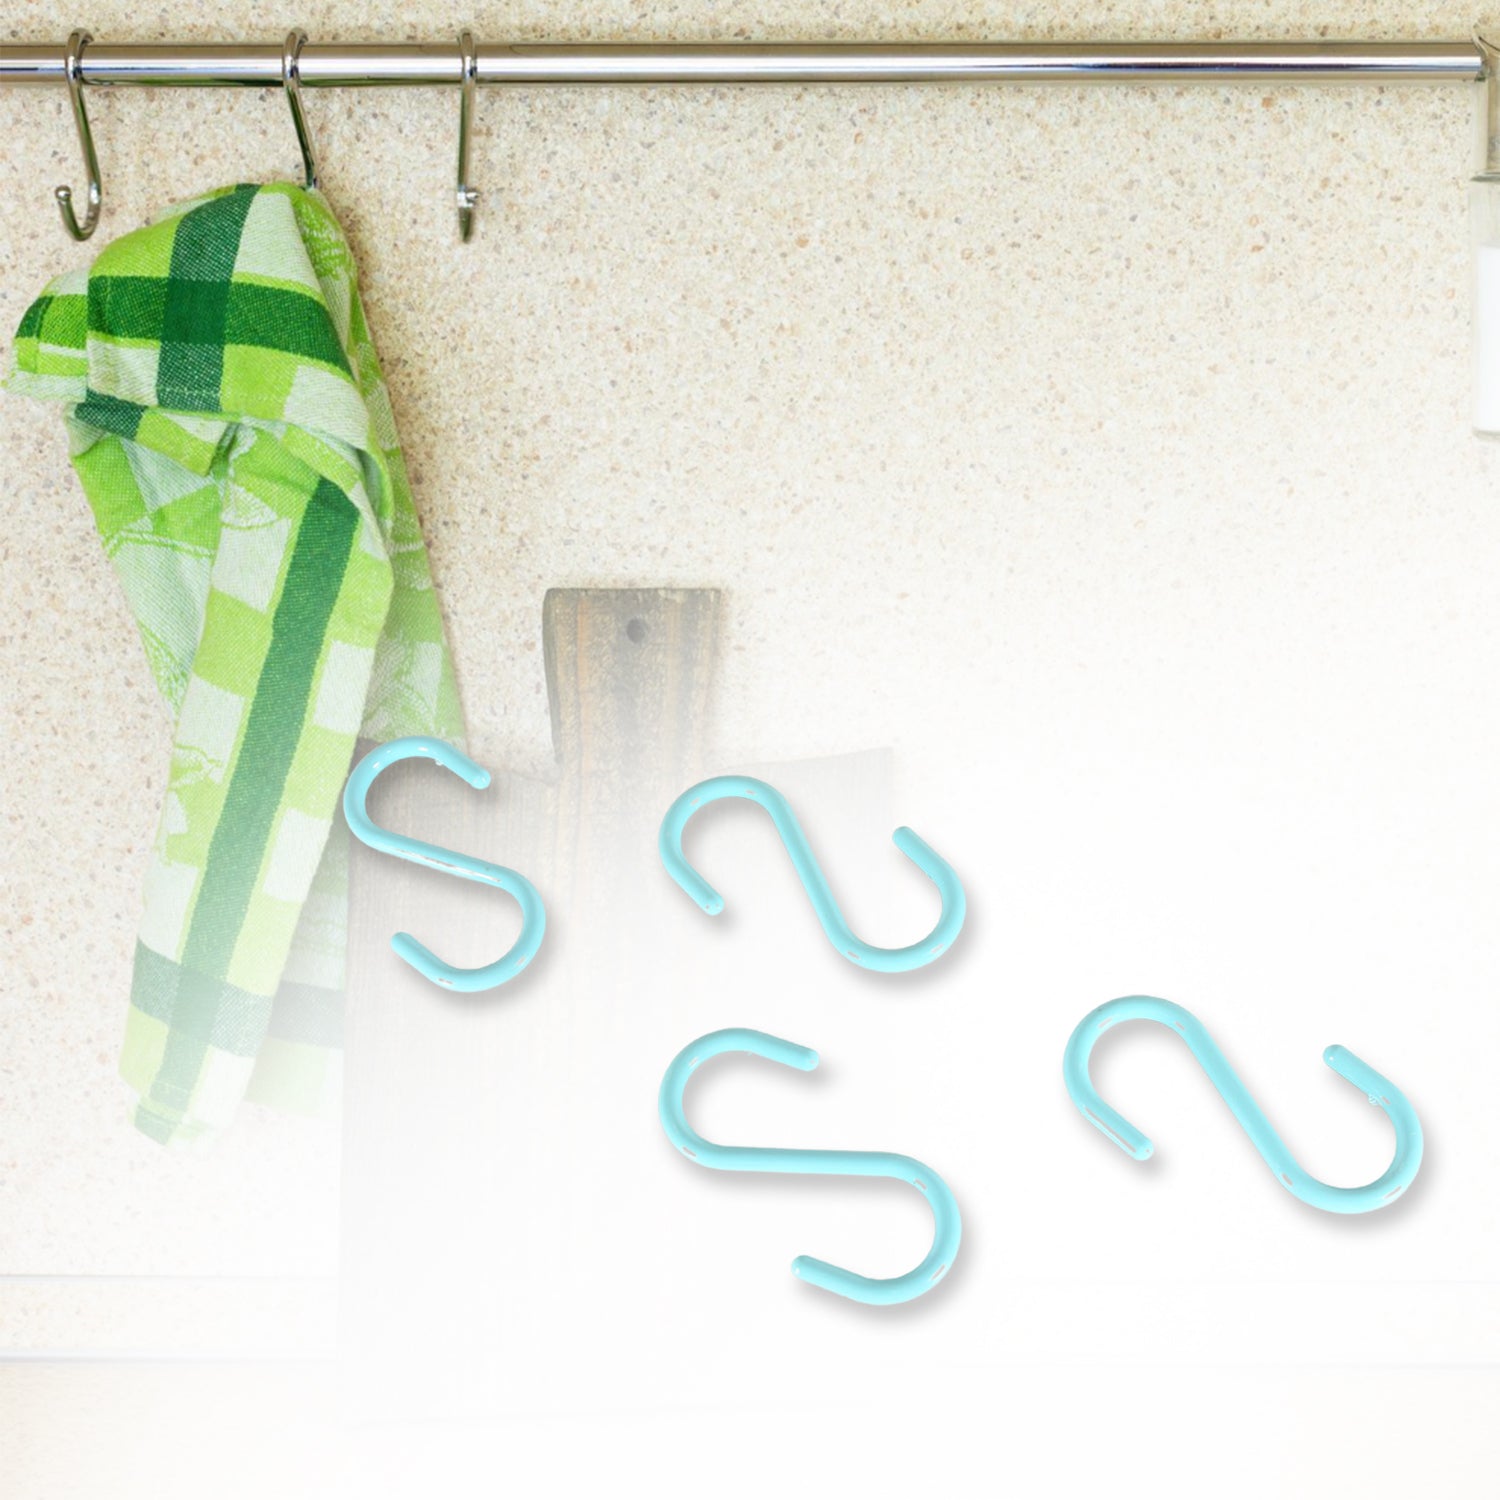 17537 Plastic S Shaped Hook Hanger S Hanging Hooks Towel Clothes Hook for Spoon Pan Pot Towel in Kitchen Bedroom Bathroom Office (4 Pcs Set)